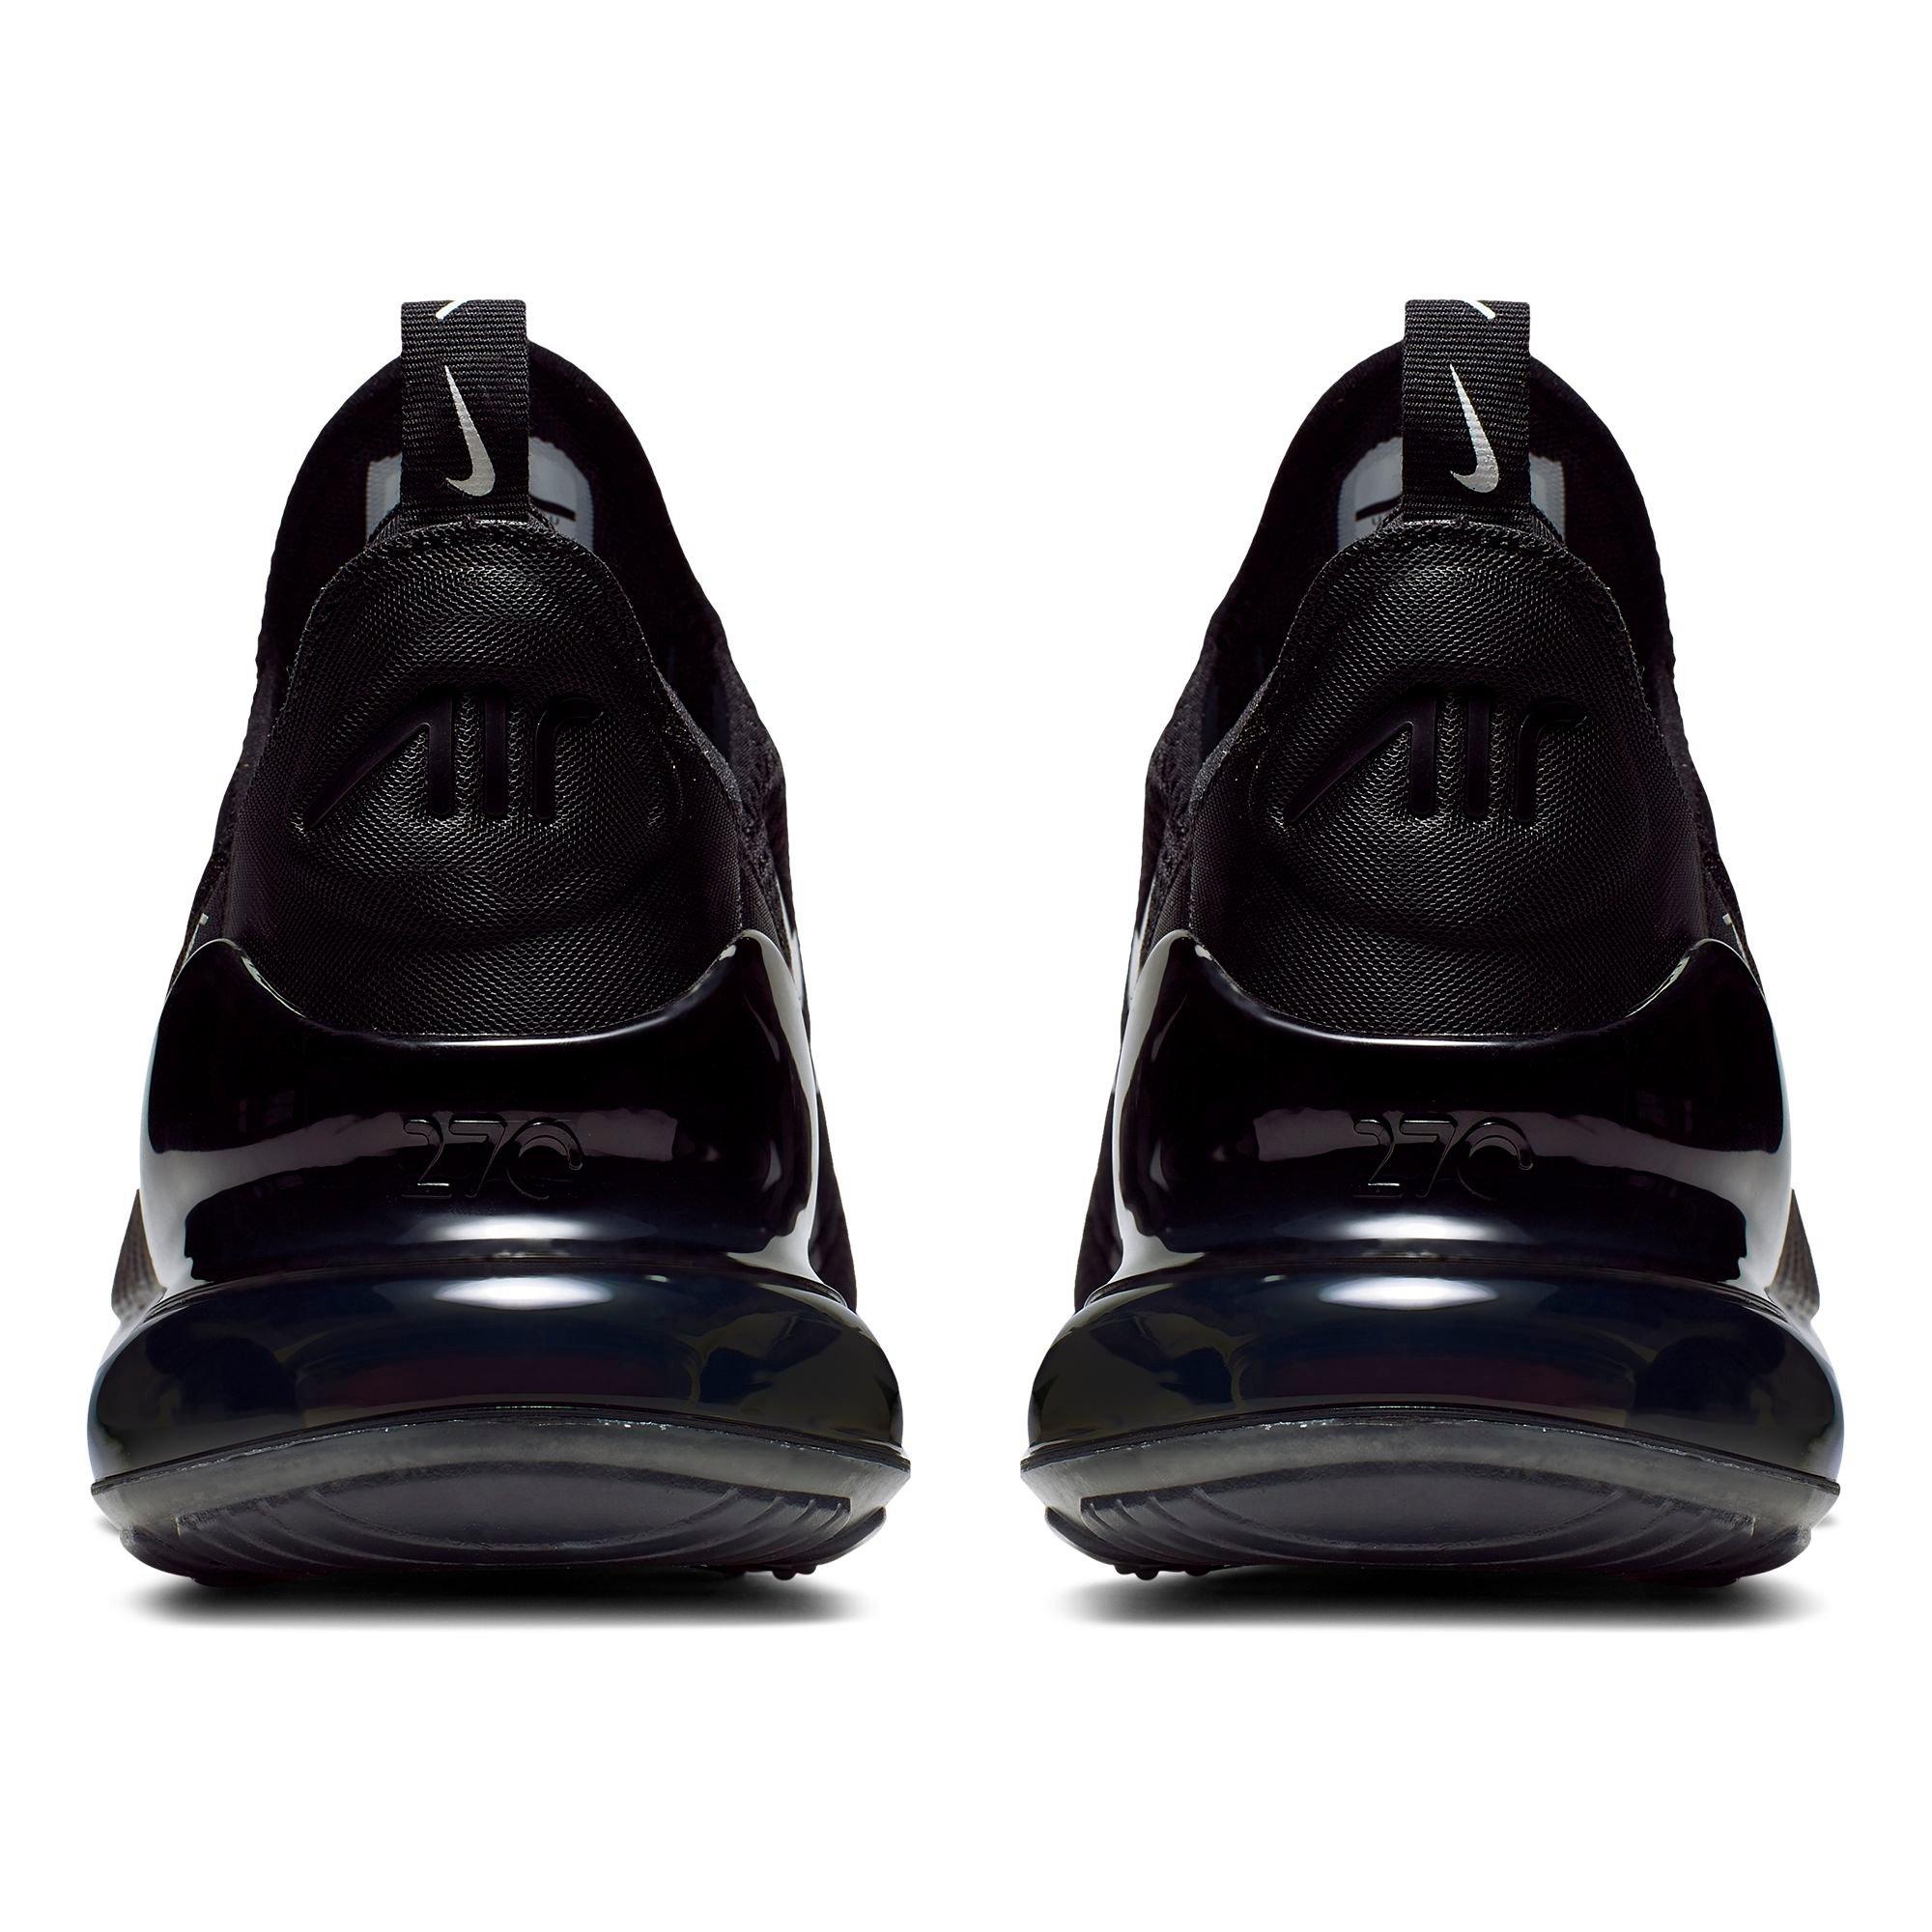 Nike Air 270 "Black/Anthracite/White/Solar Red" Men's Shoe